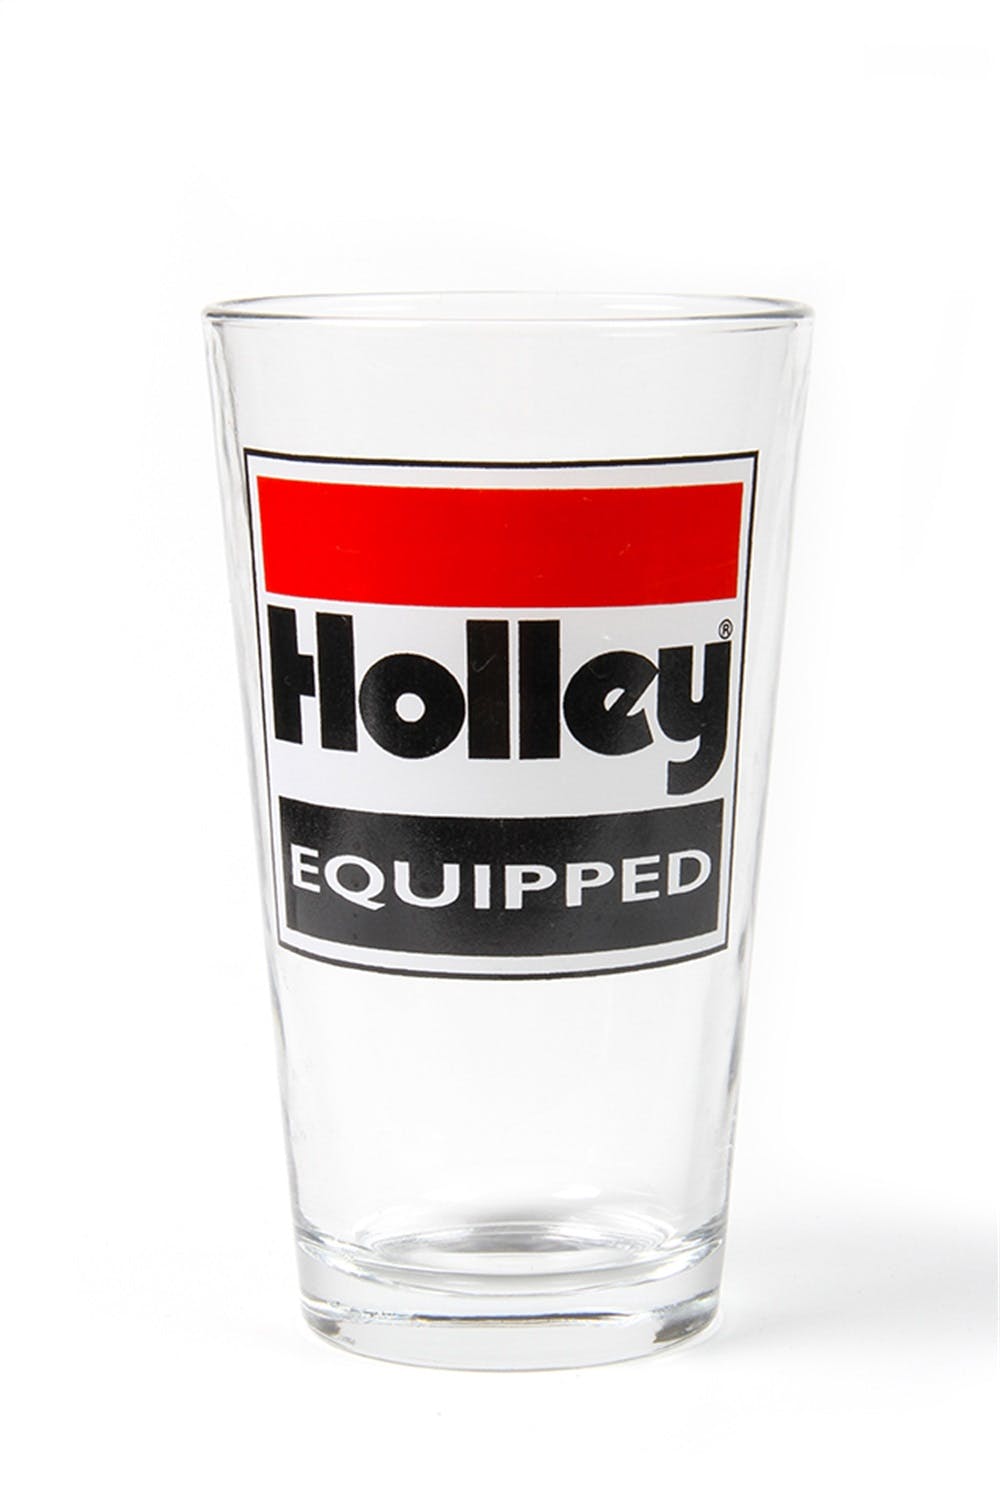 Holley 36-435 16oz Pub Glasses Assortment w/Holley Brands Logos 4PK